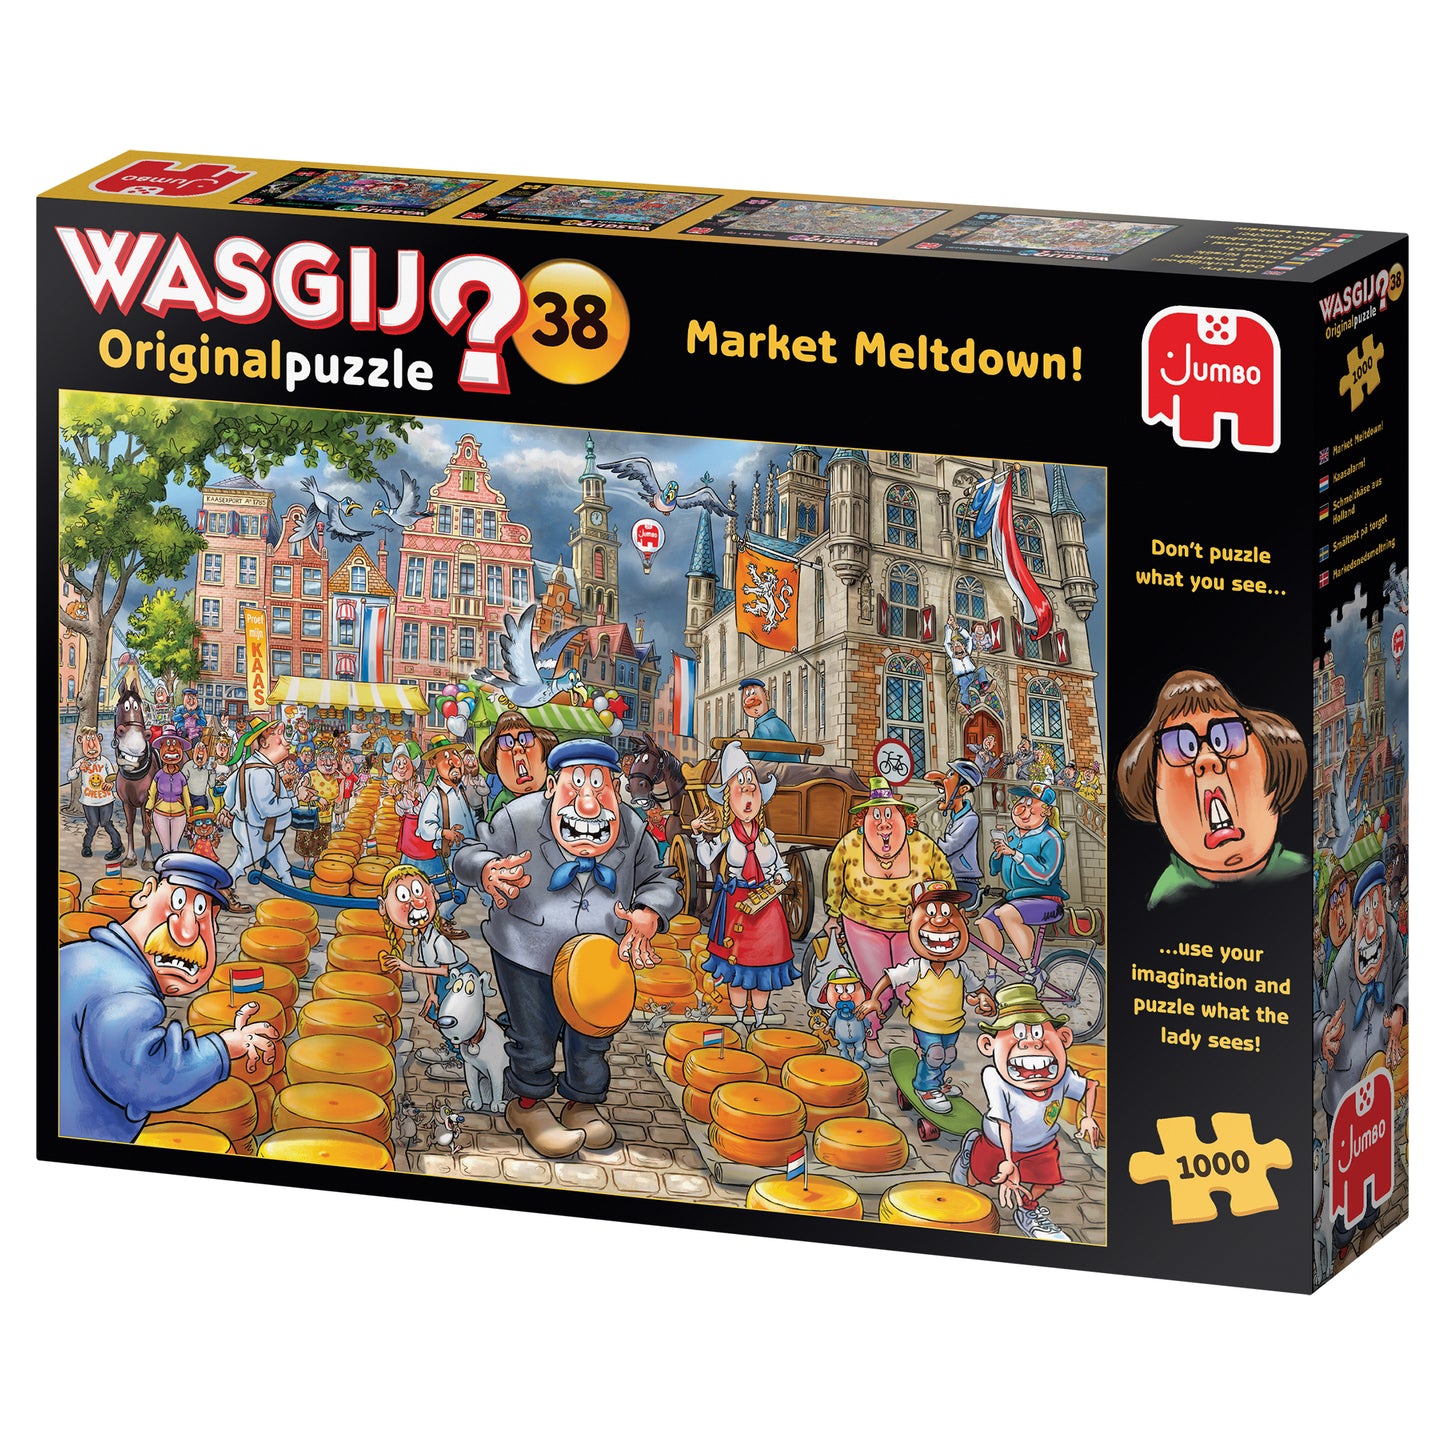 Wasgij Original 38 1000pcs - product image - Jumboplay.com